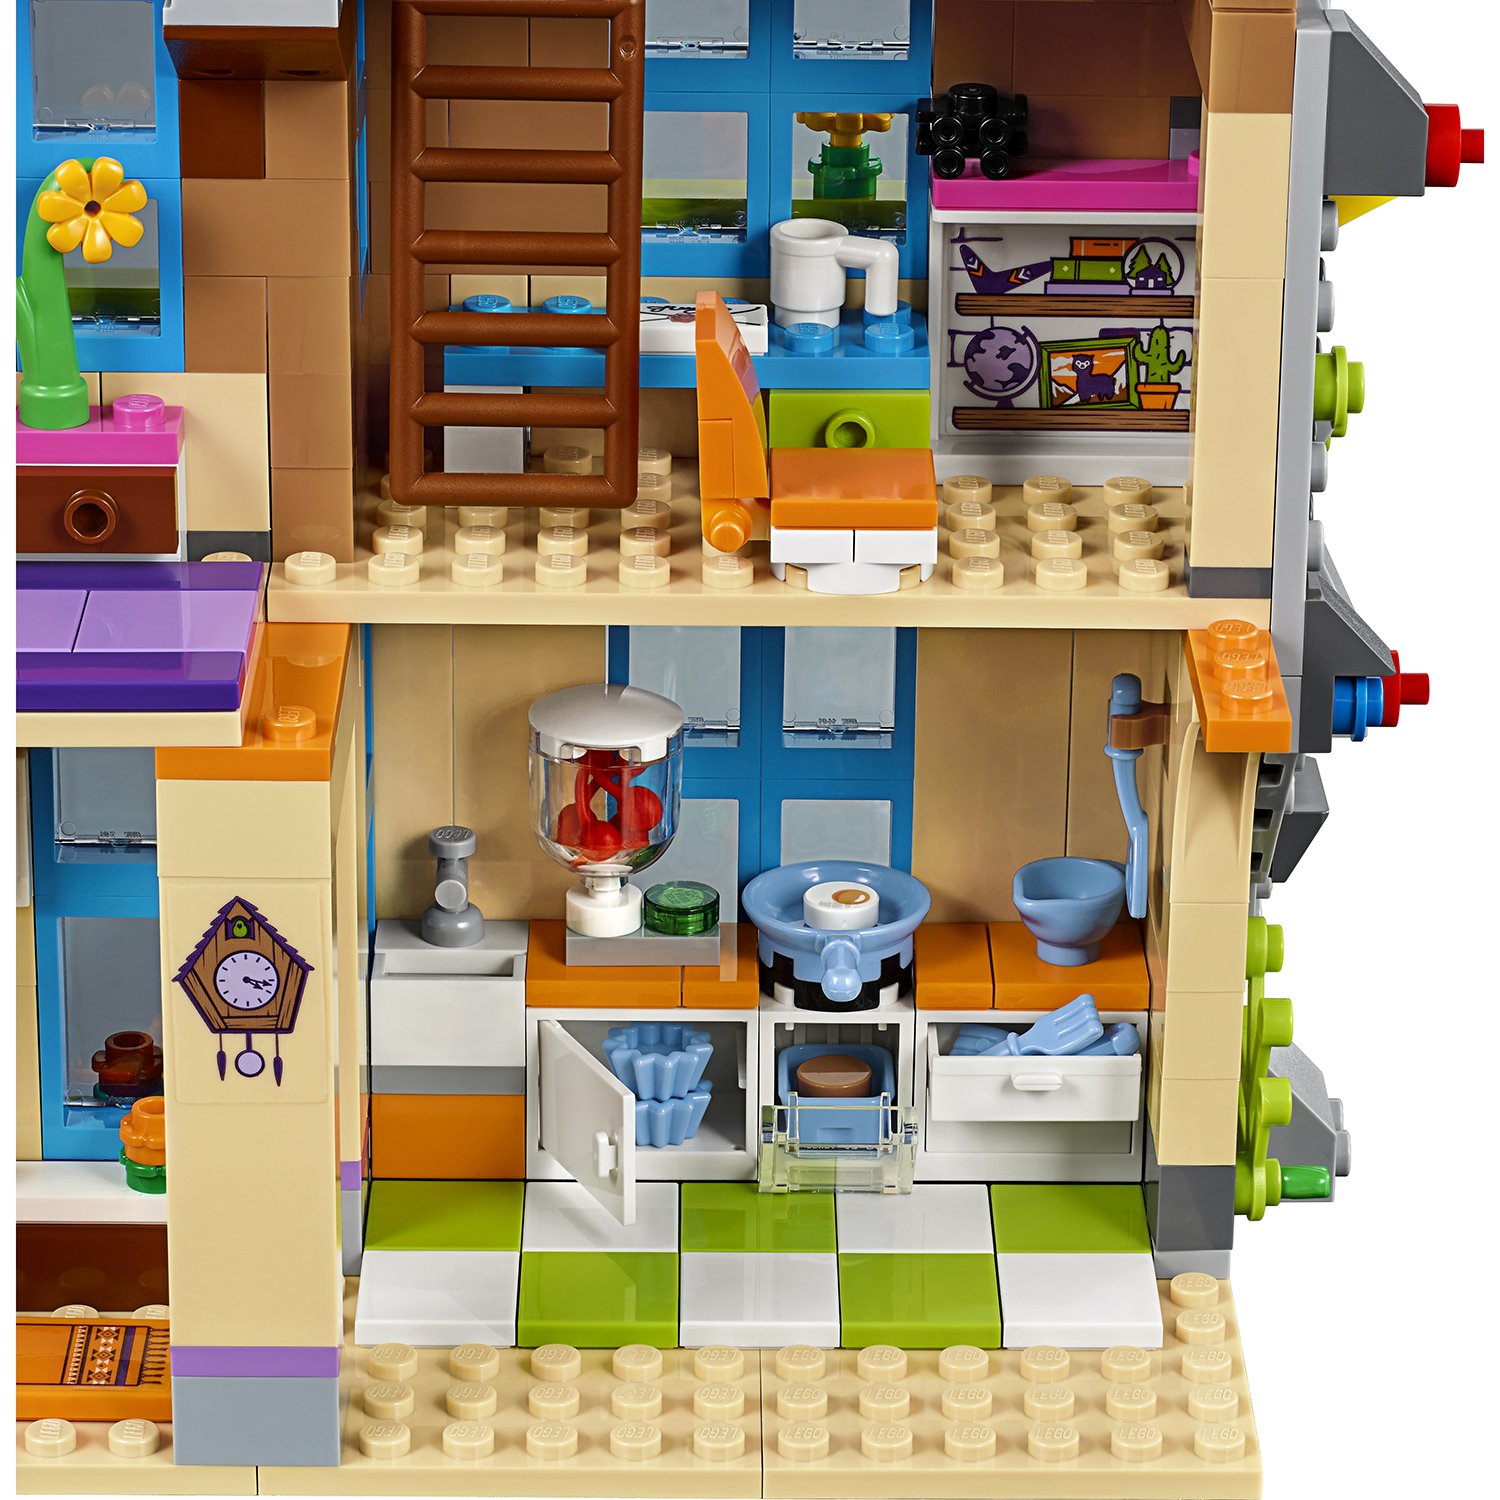 Lego Friends 41369 Дом Мии